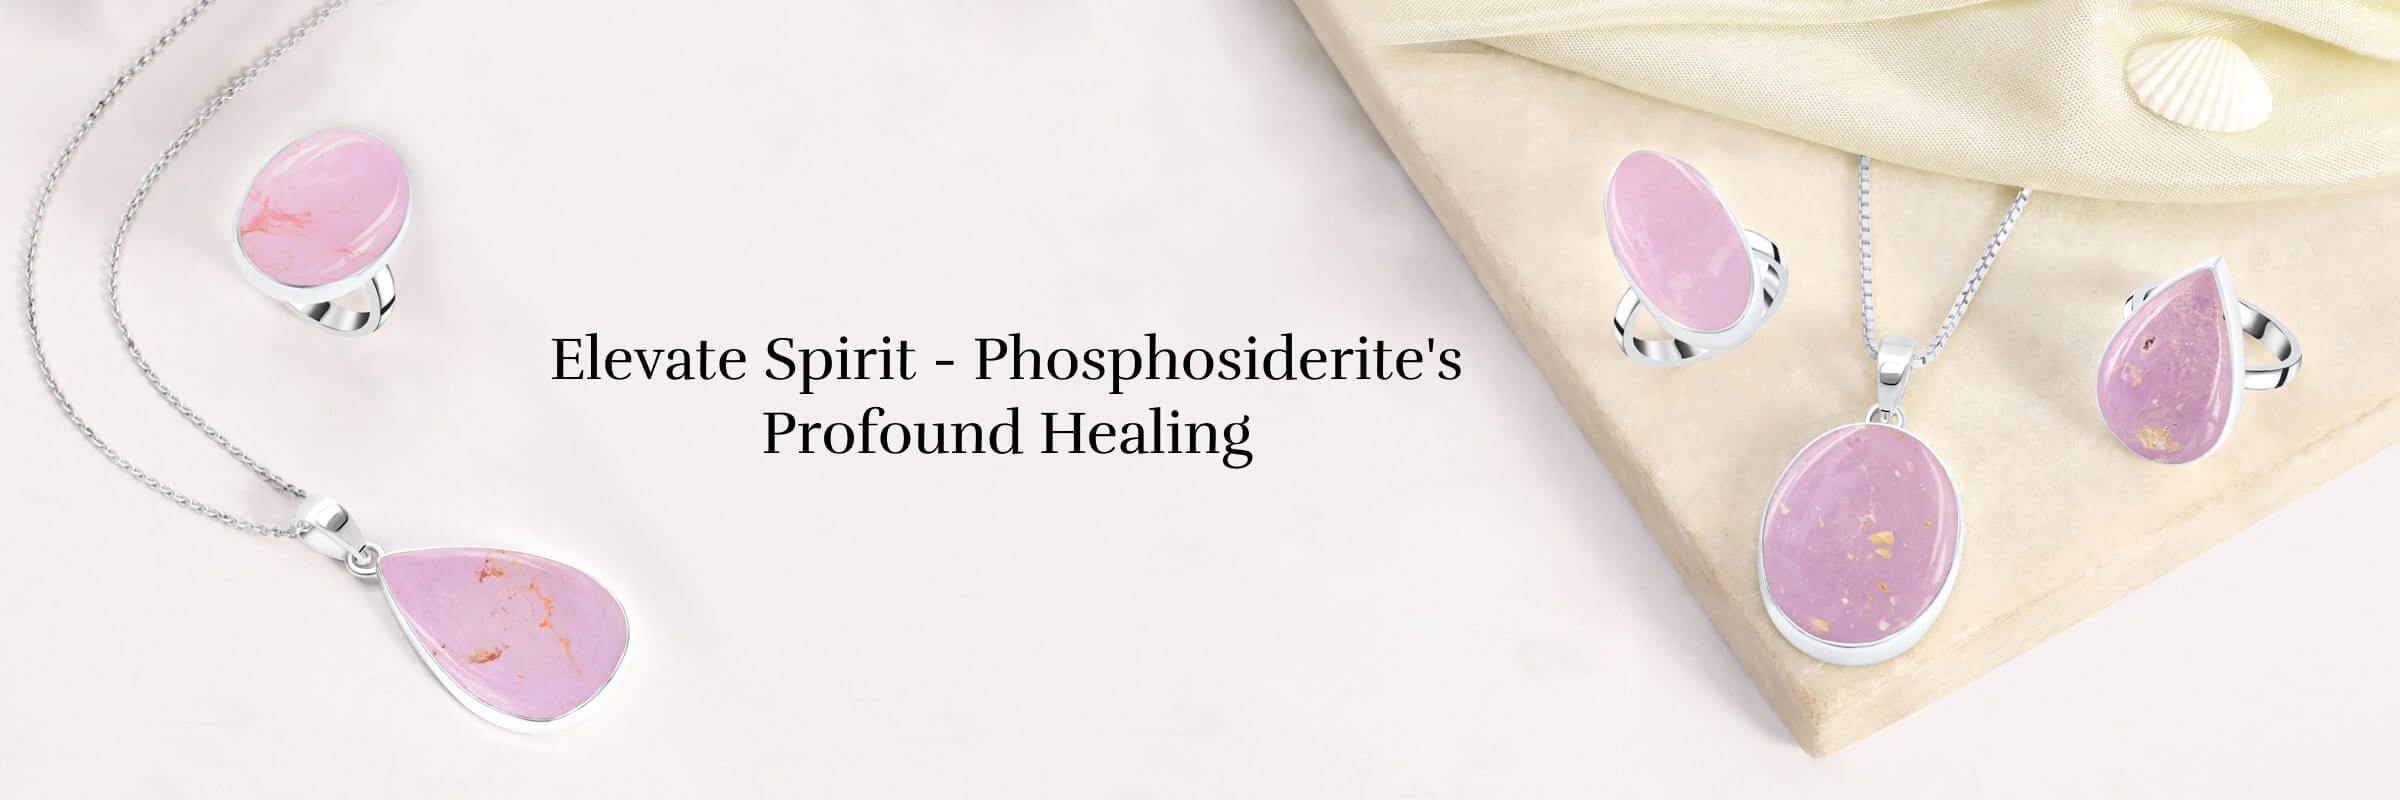 Phosphosiderite: Spiritual Healing